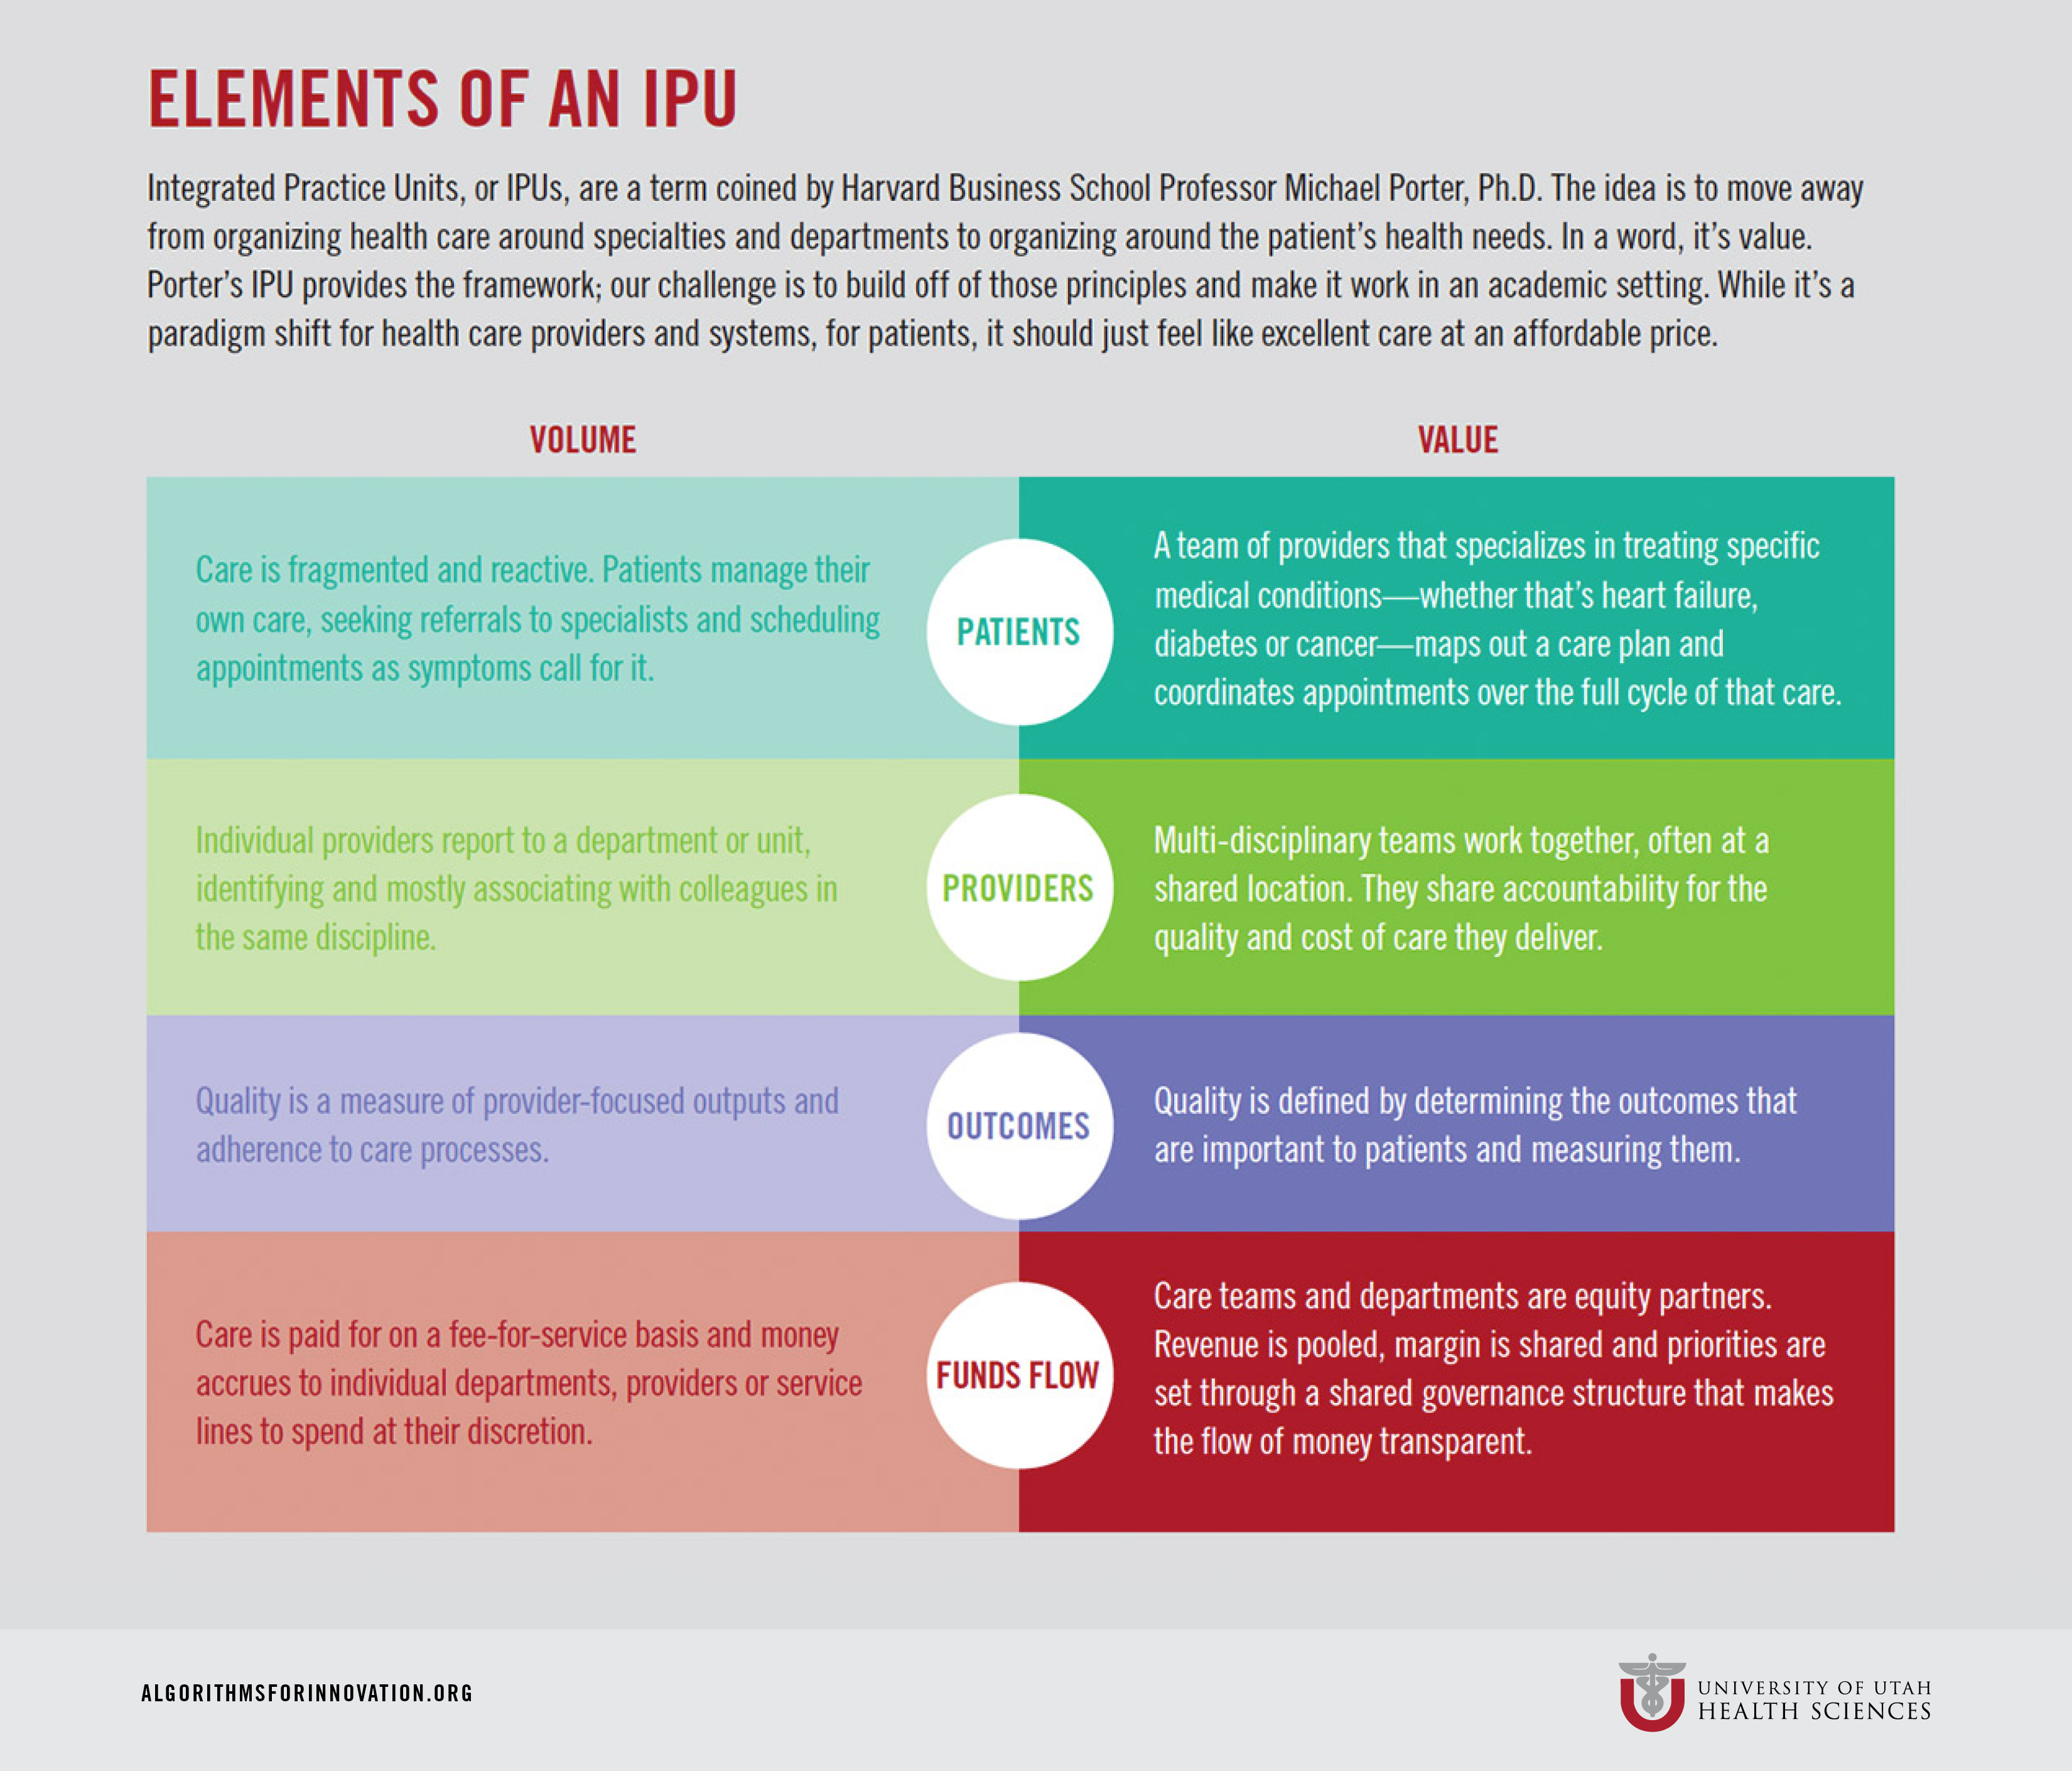 Elements of an IPU